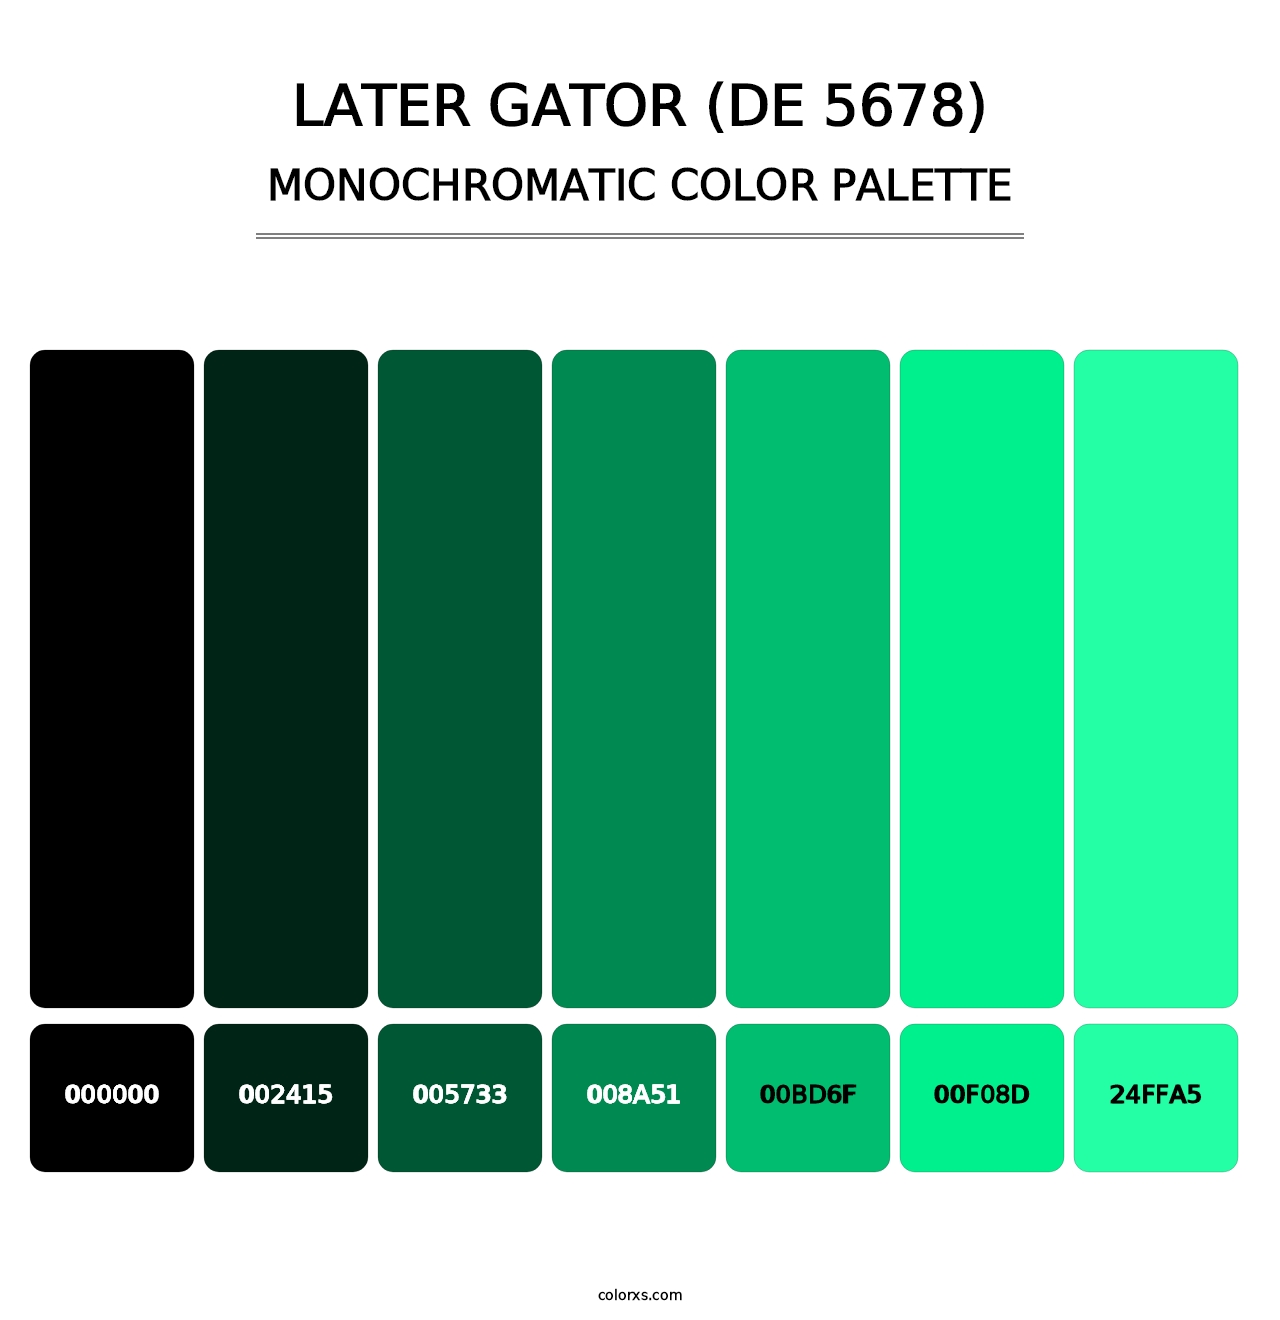 Later Gator (DE 5678) - Monochromatic Color Palette